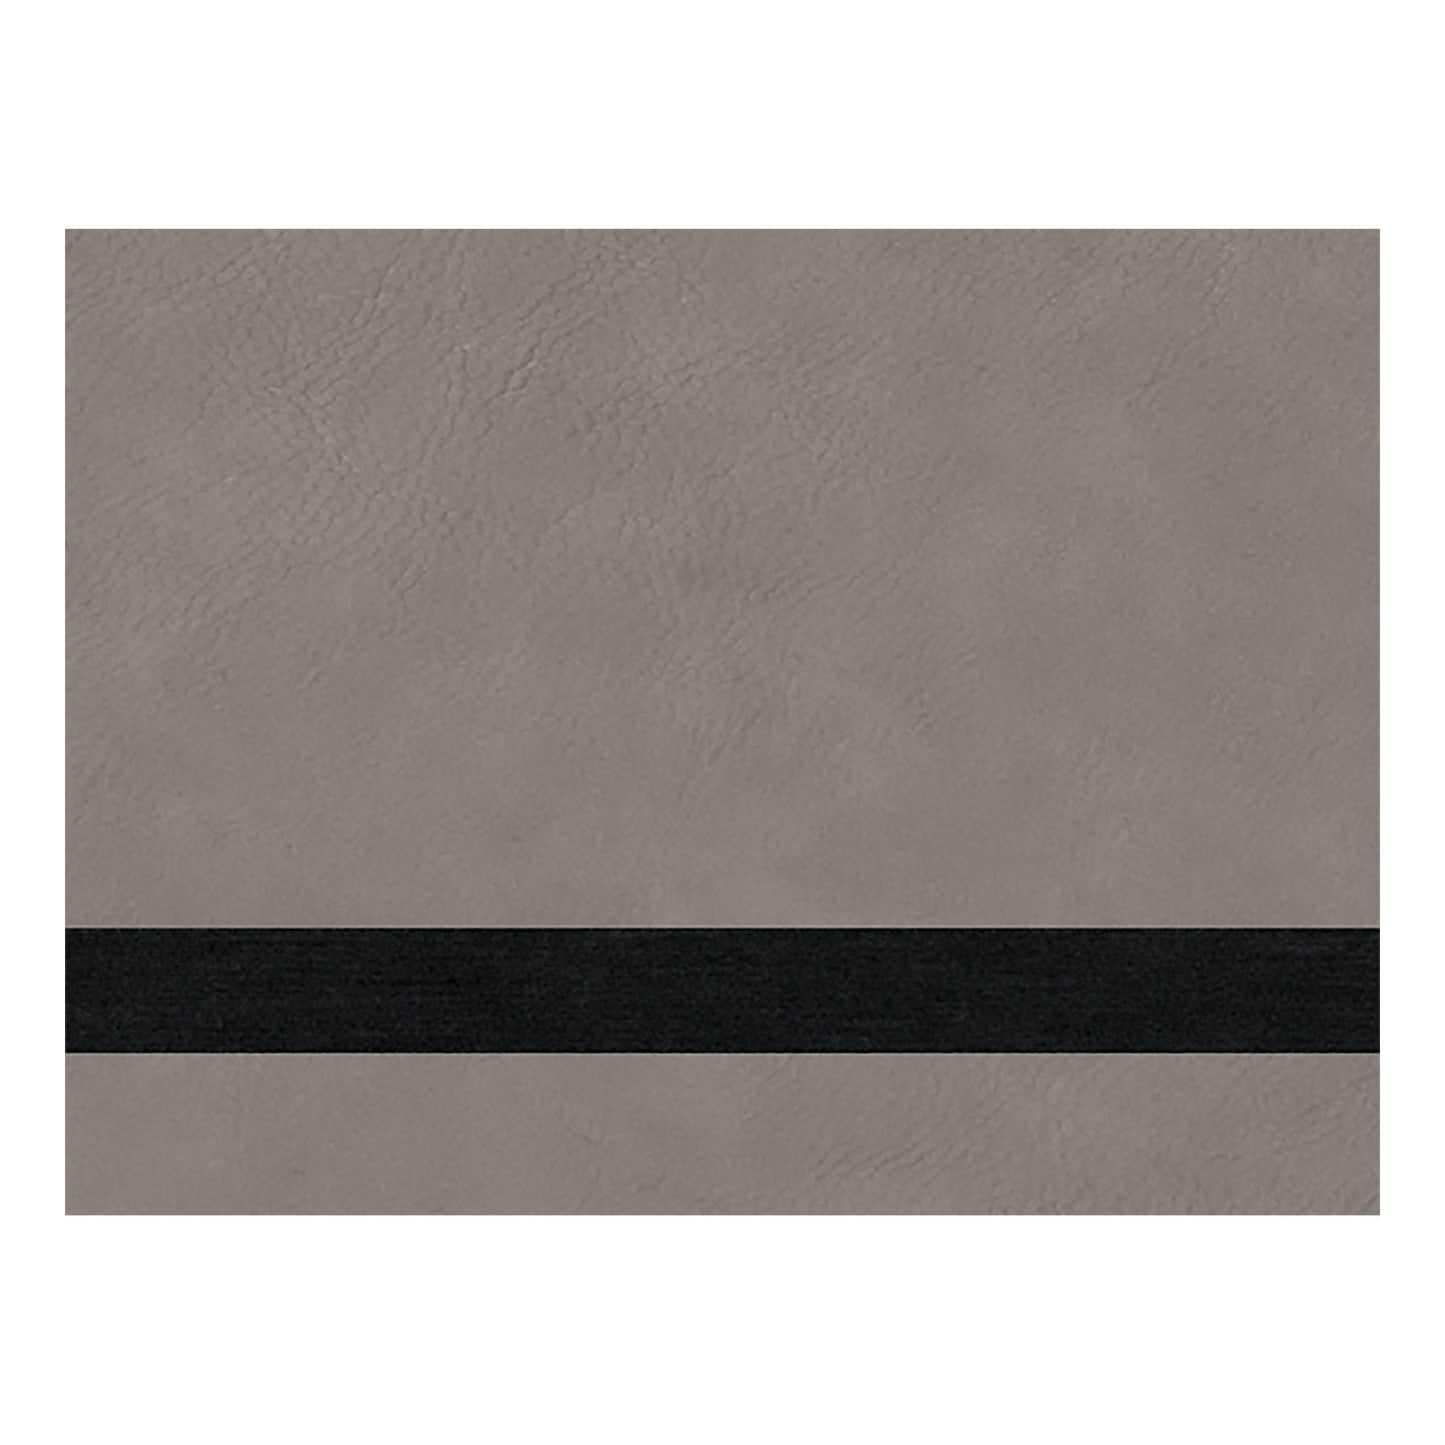 Leatherette Sheets - 12" x 24"